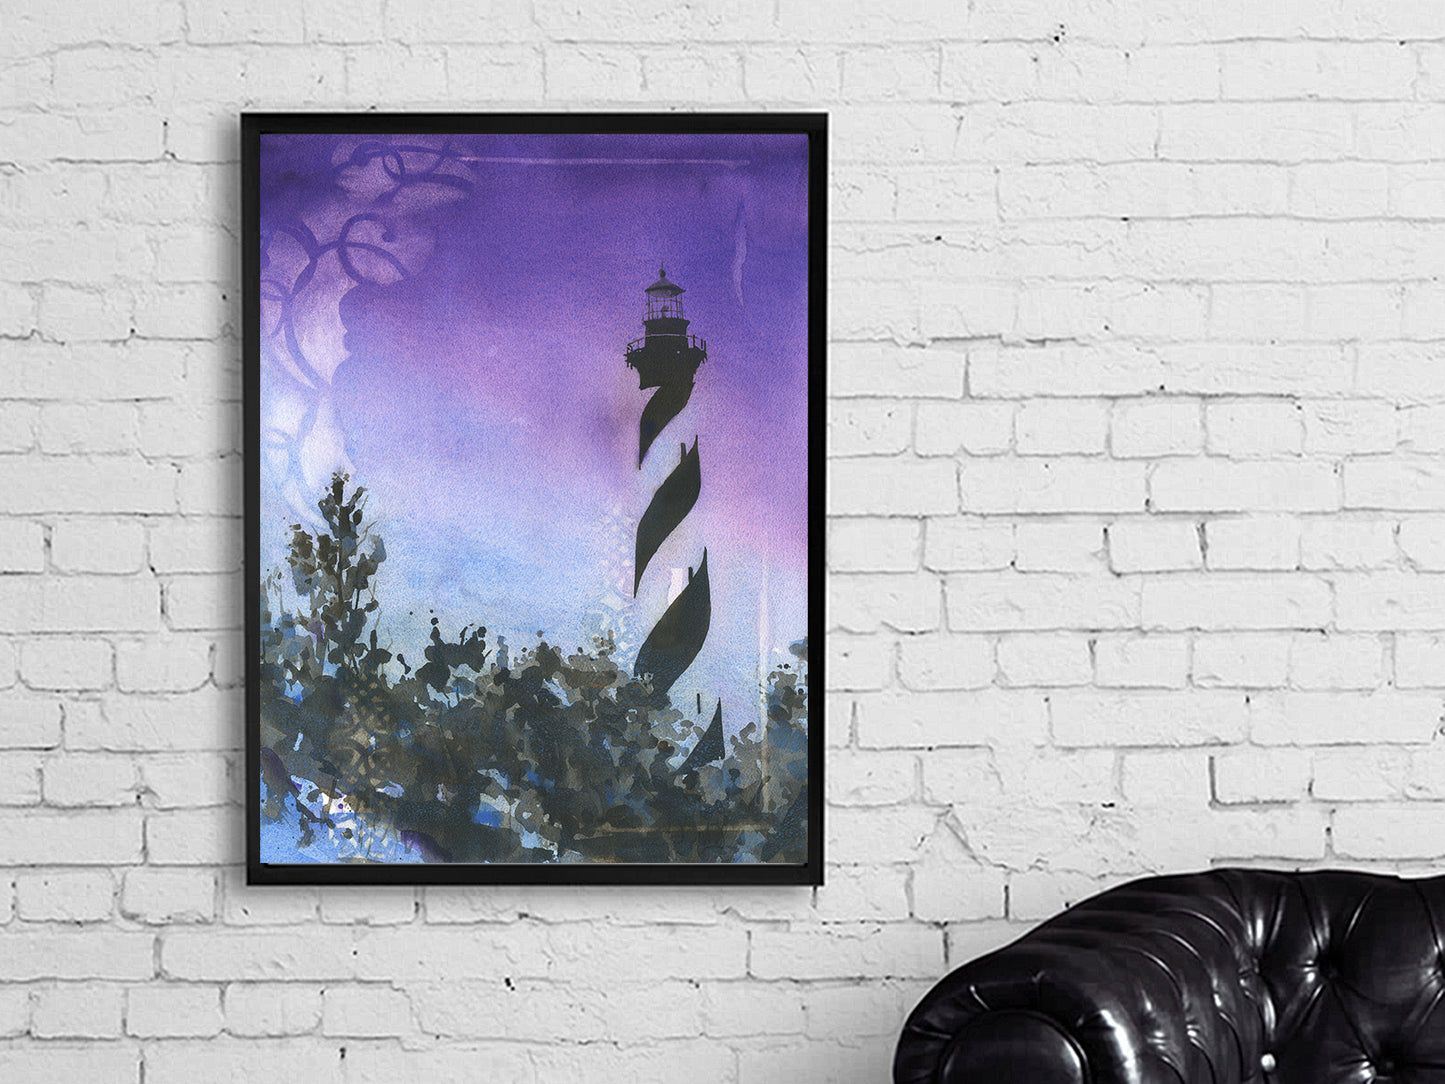 Cape Hatteras lighthouse on  the Outer Banks, North Carolina.  OBX artwork coastal painting beach house artwork (original)